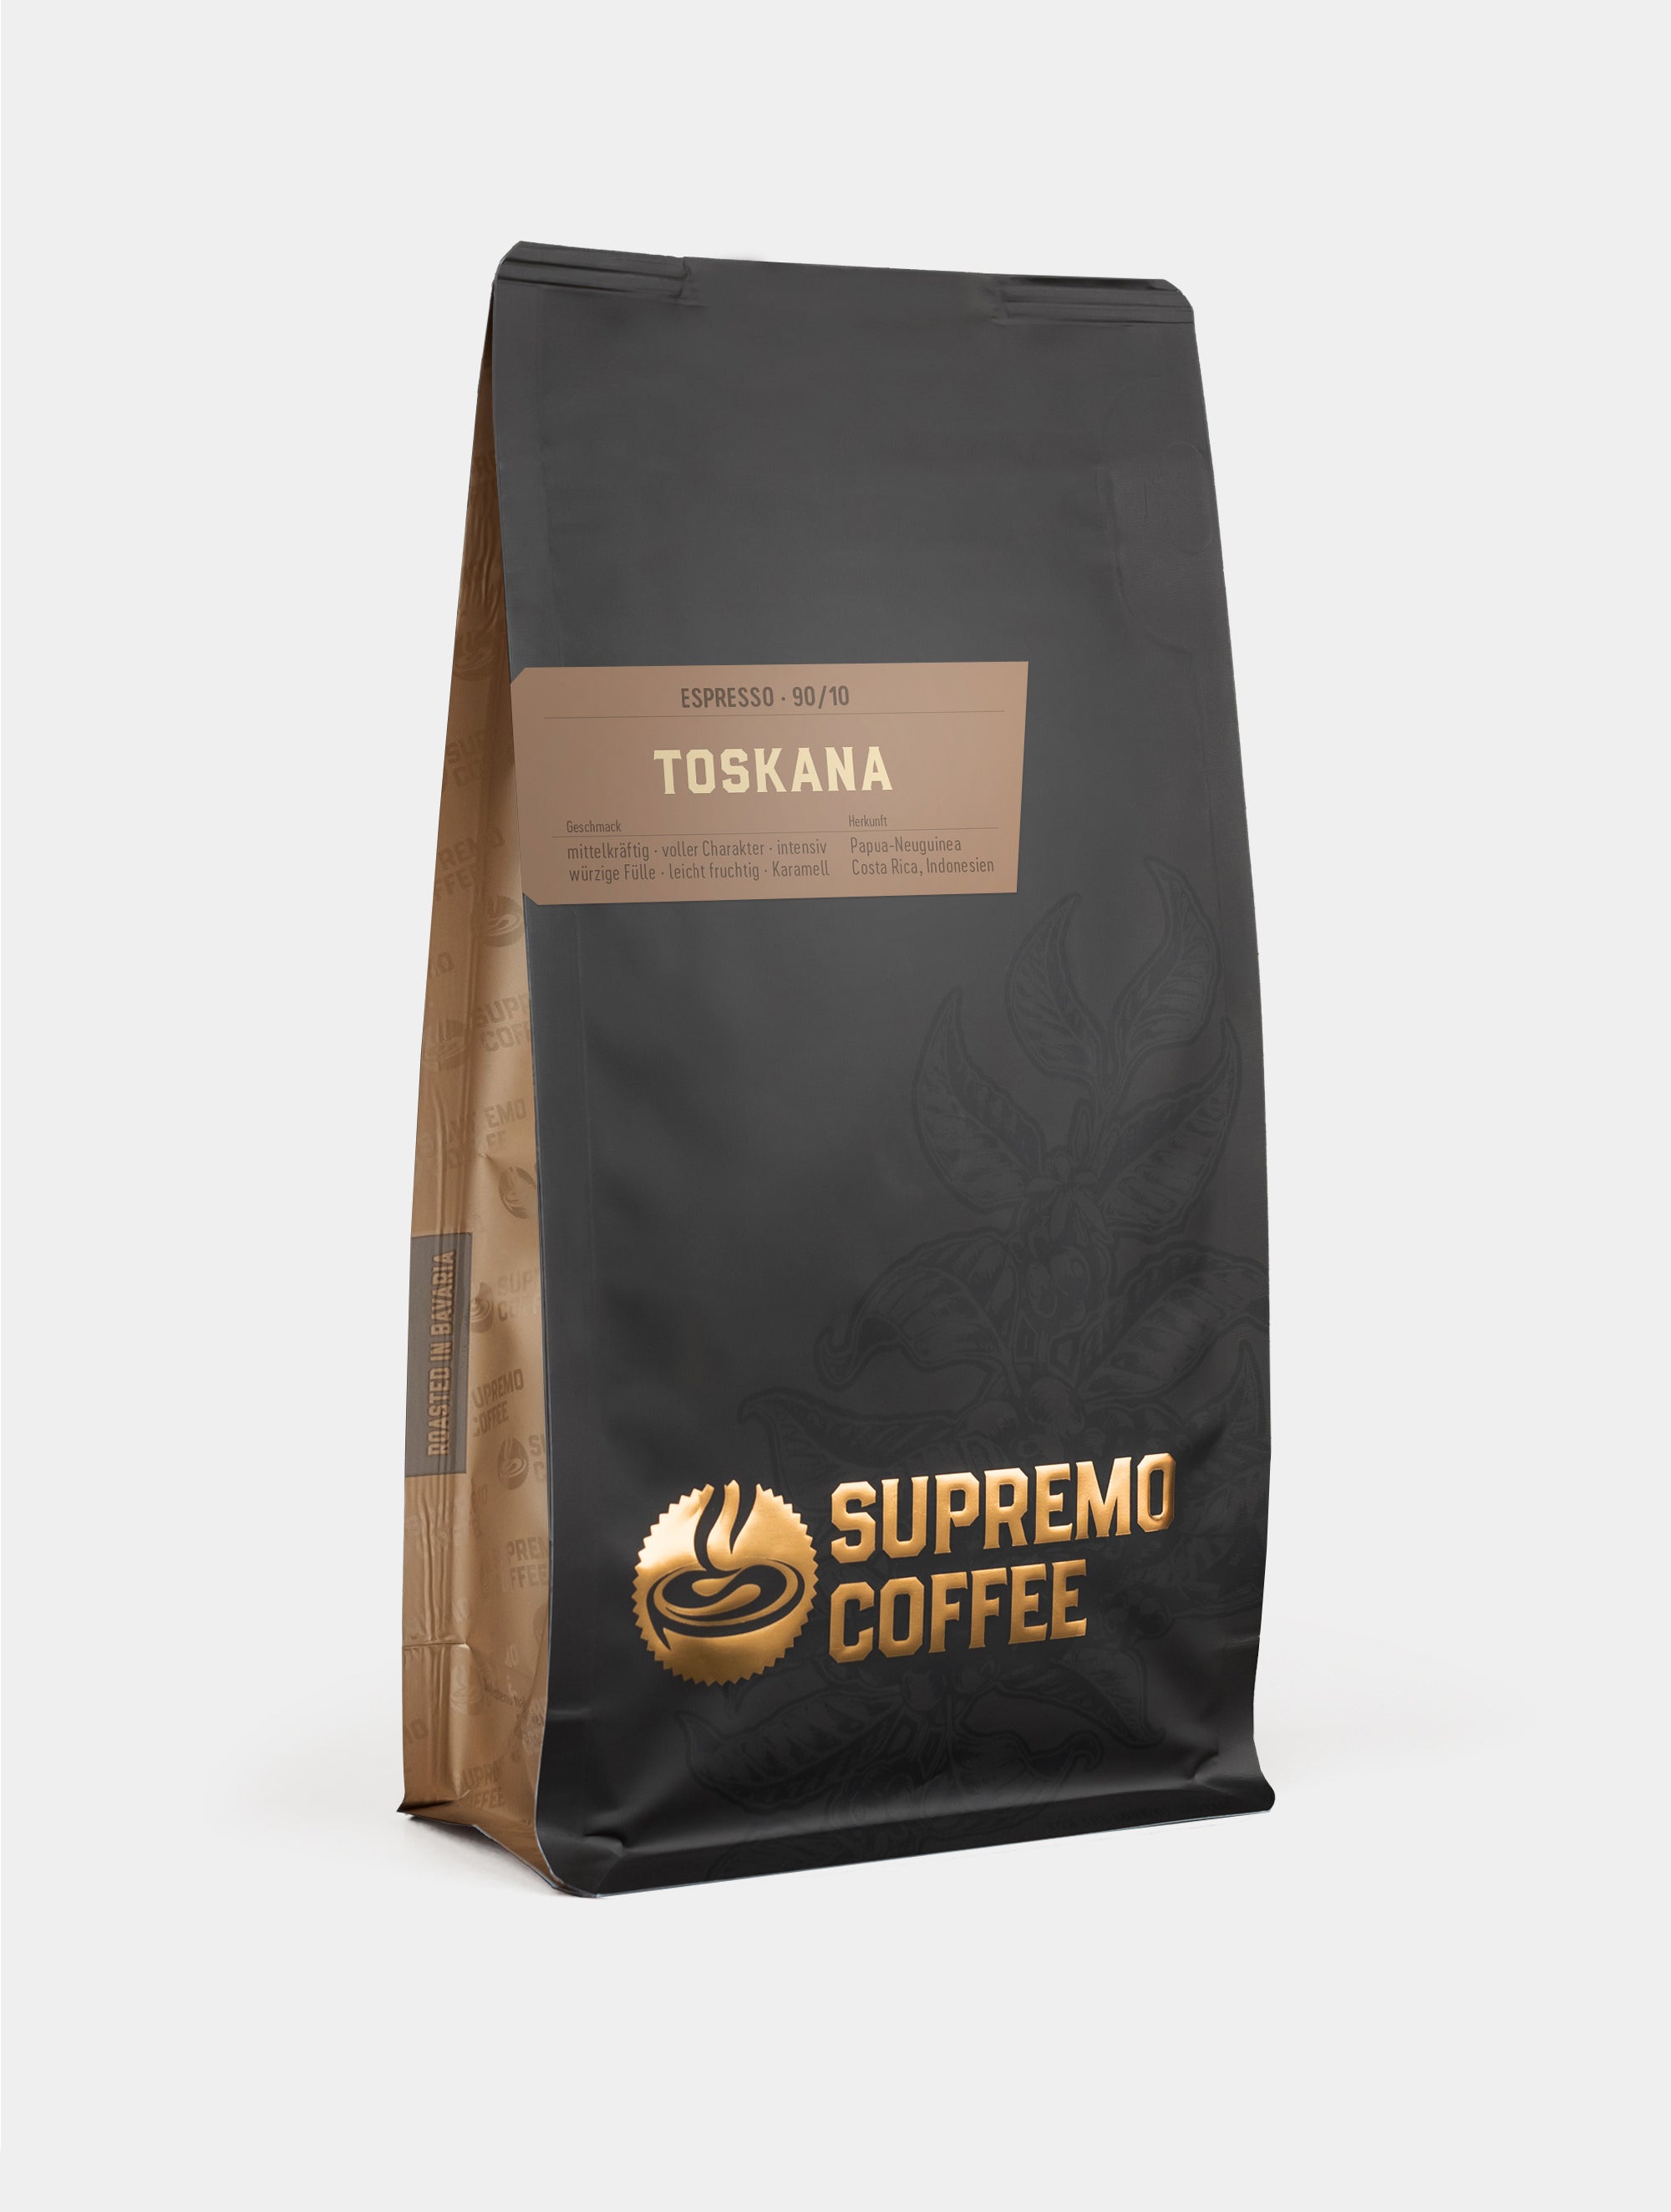 Toskana, Espresso 90/10 | SUPREMO Coffee